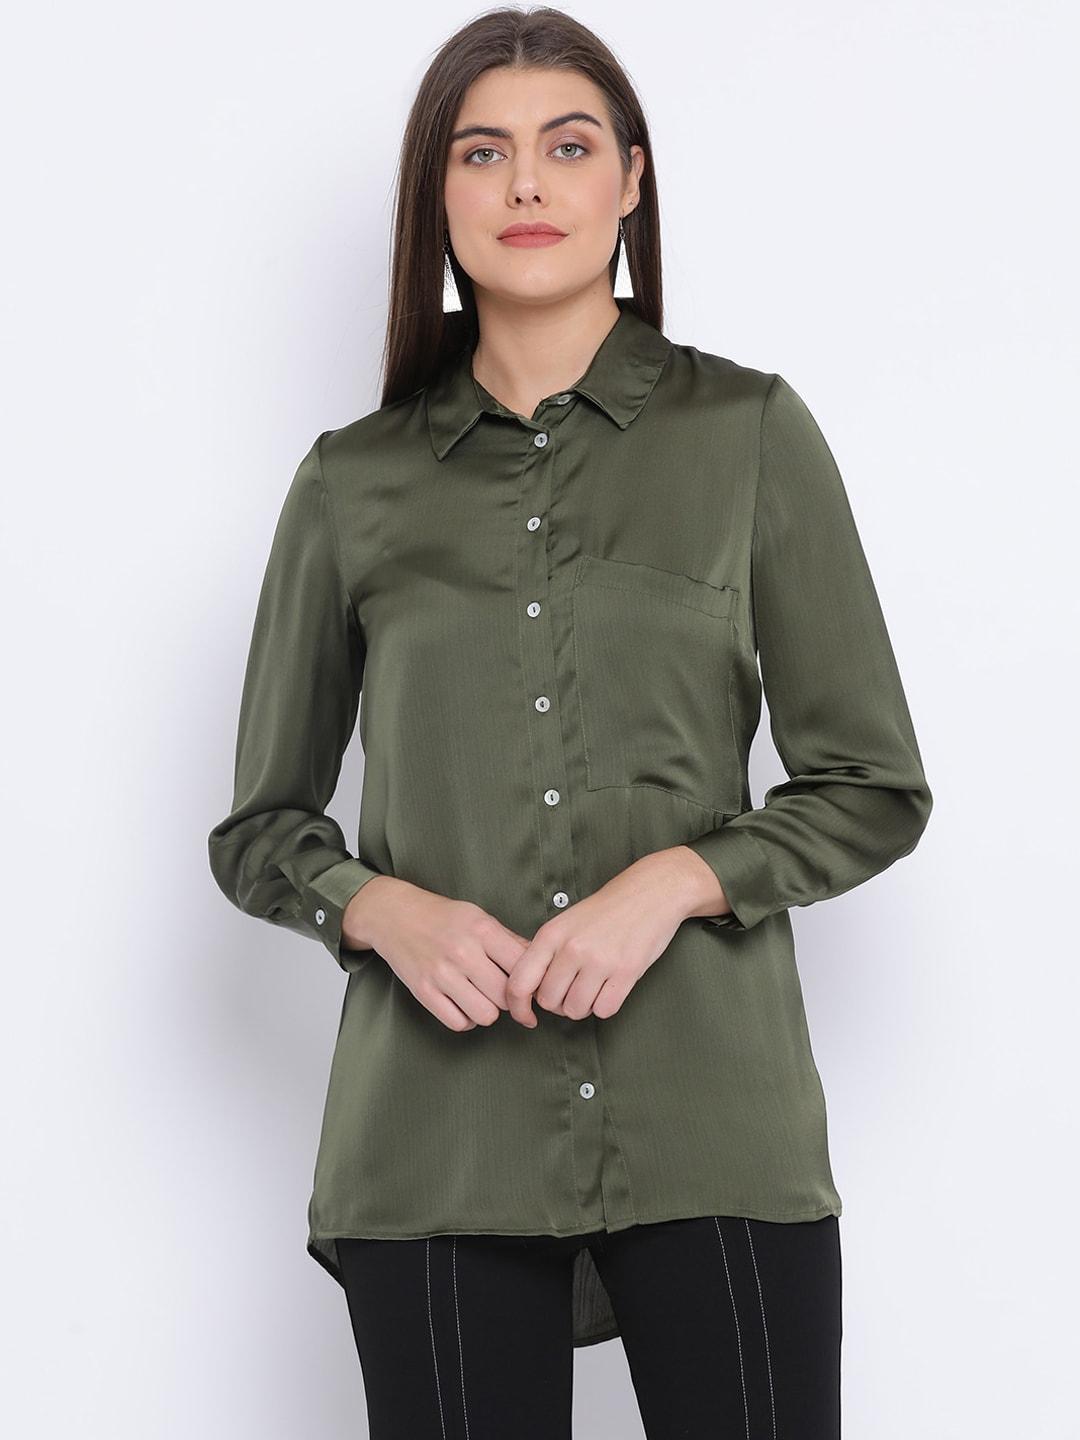 oxolloxo-women-green-regular-fit-solid-casual-shirt